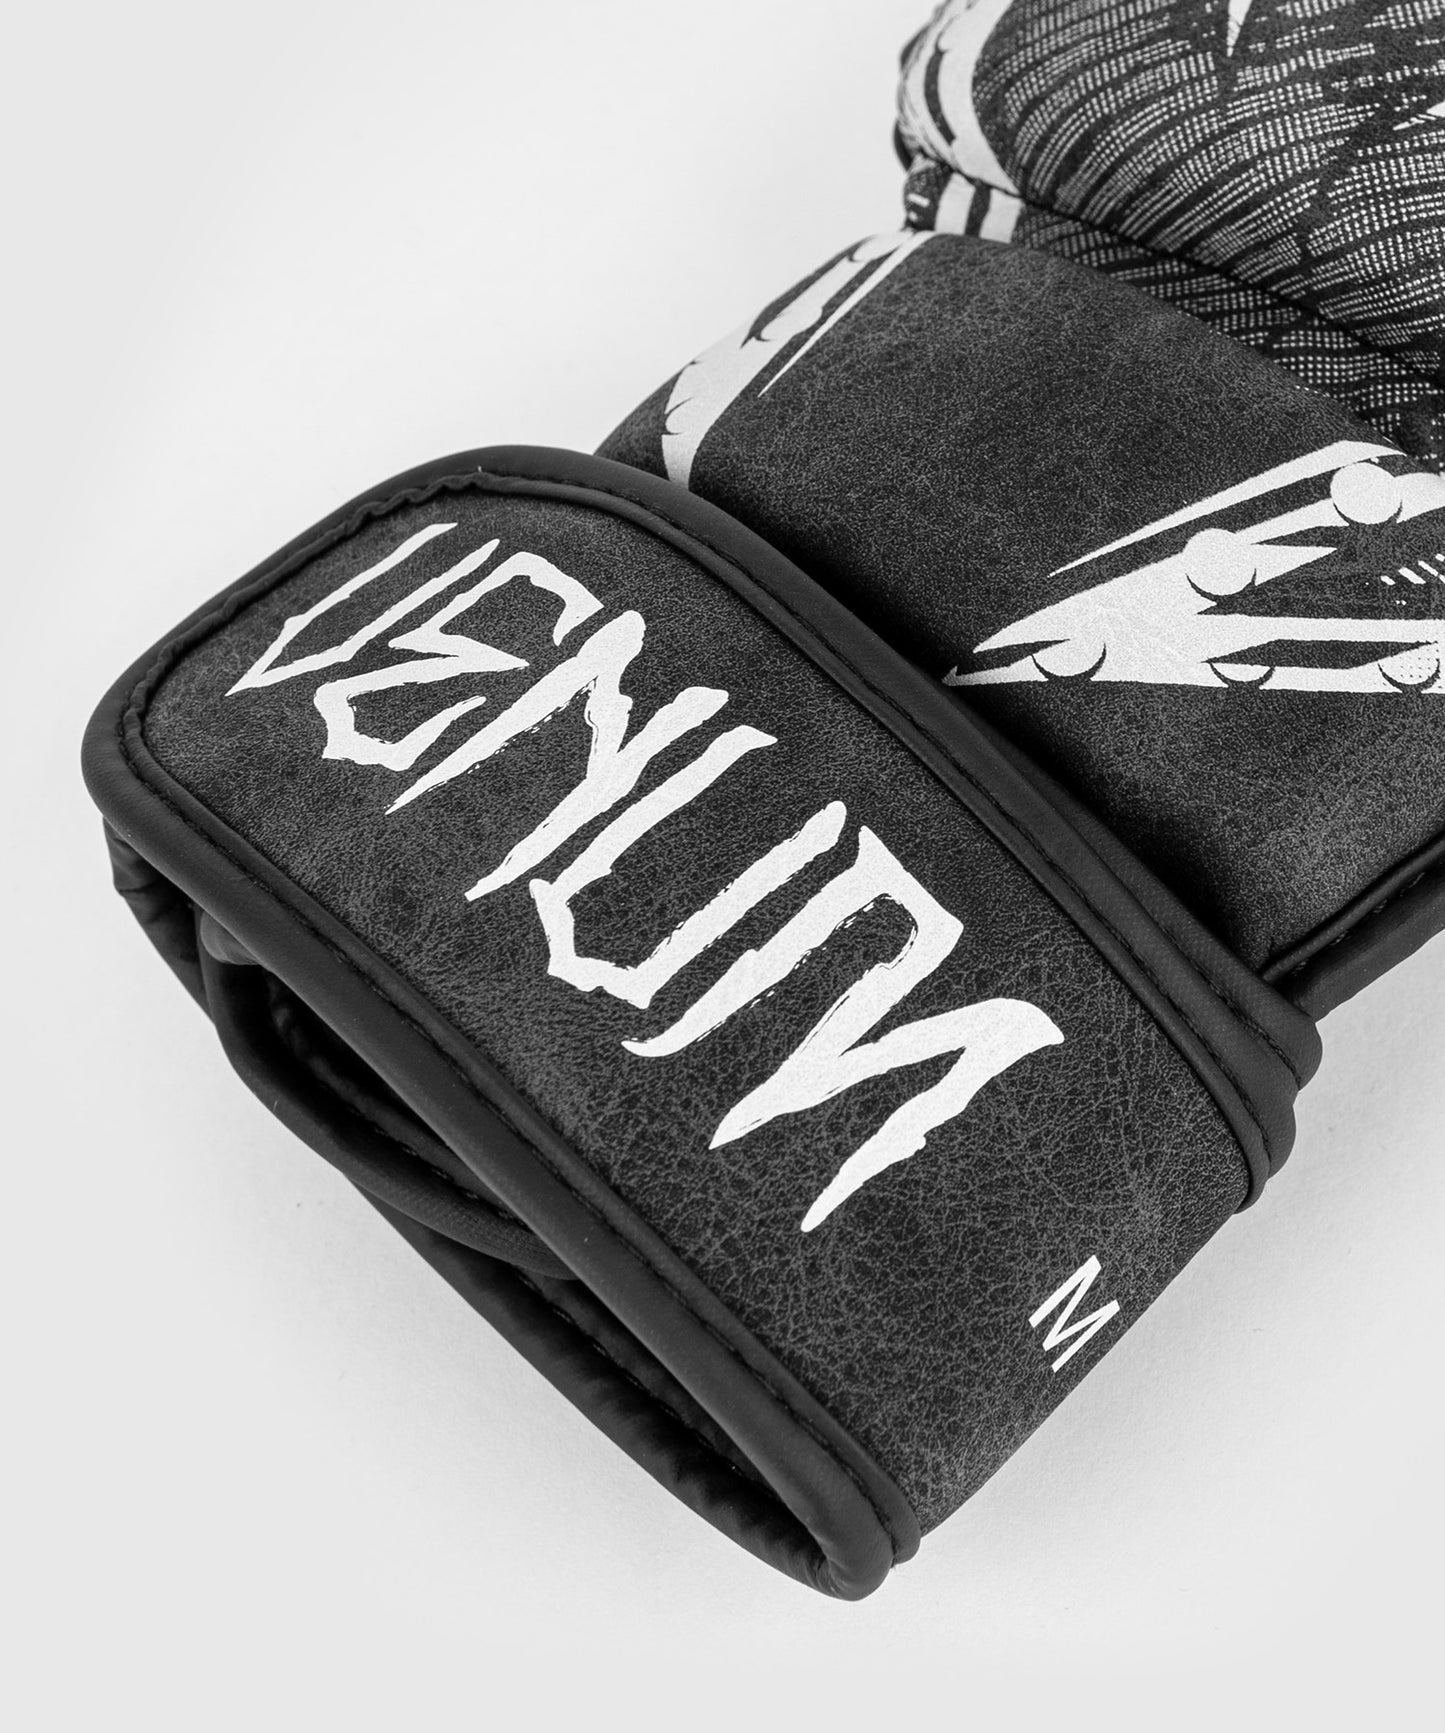 Venum GLDTR 4.0 MMA Gloves